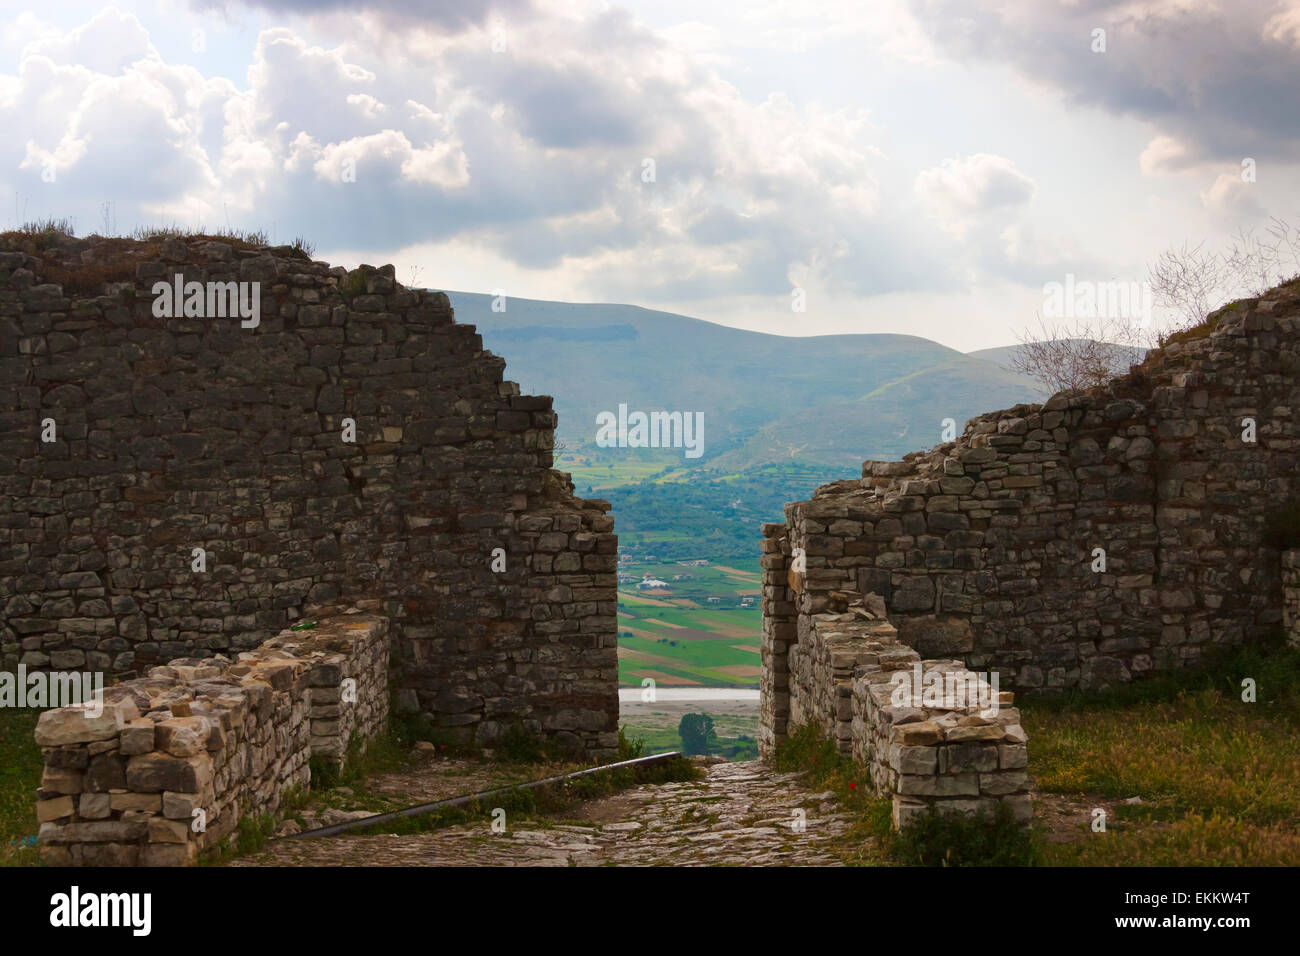 The citadel and castle of Berat (UNESCO World Heritage site), Albania Stock Photo